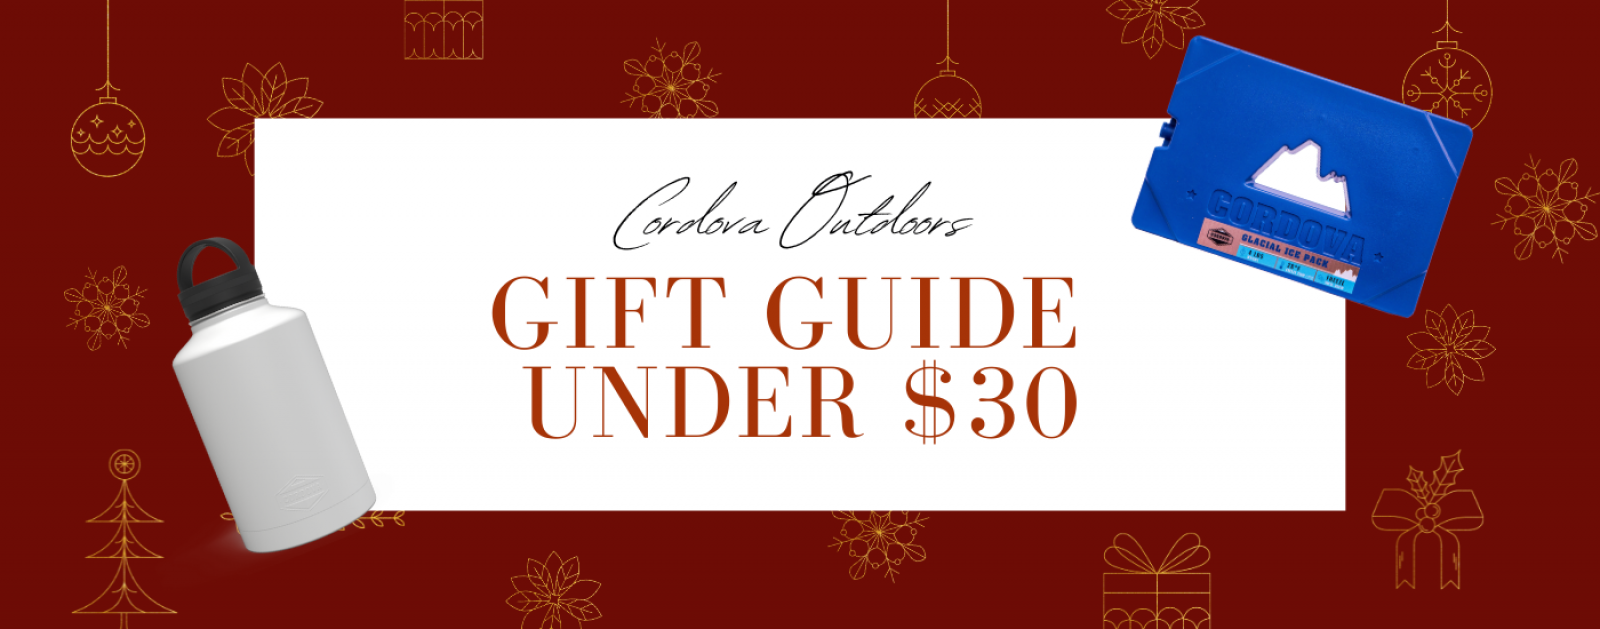 Christmas Gift Guide for Women Under $30